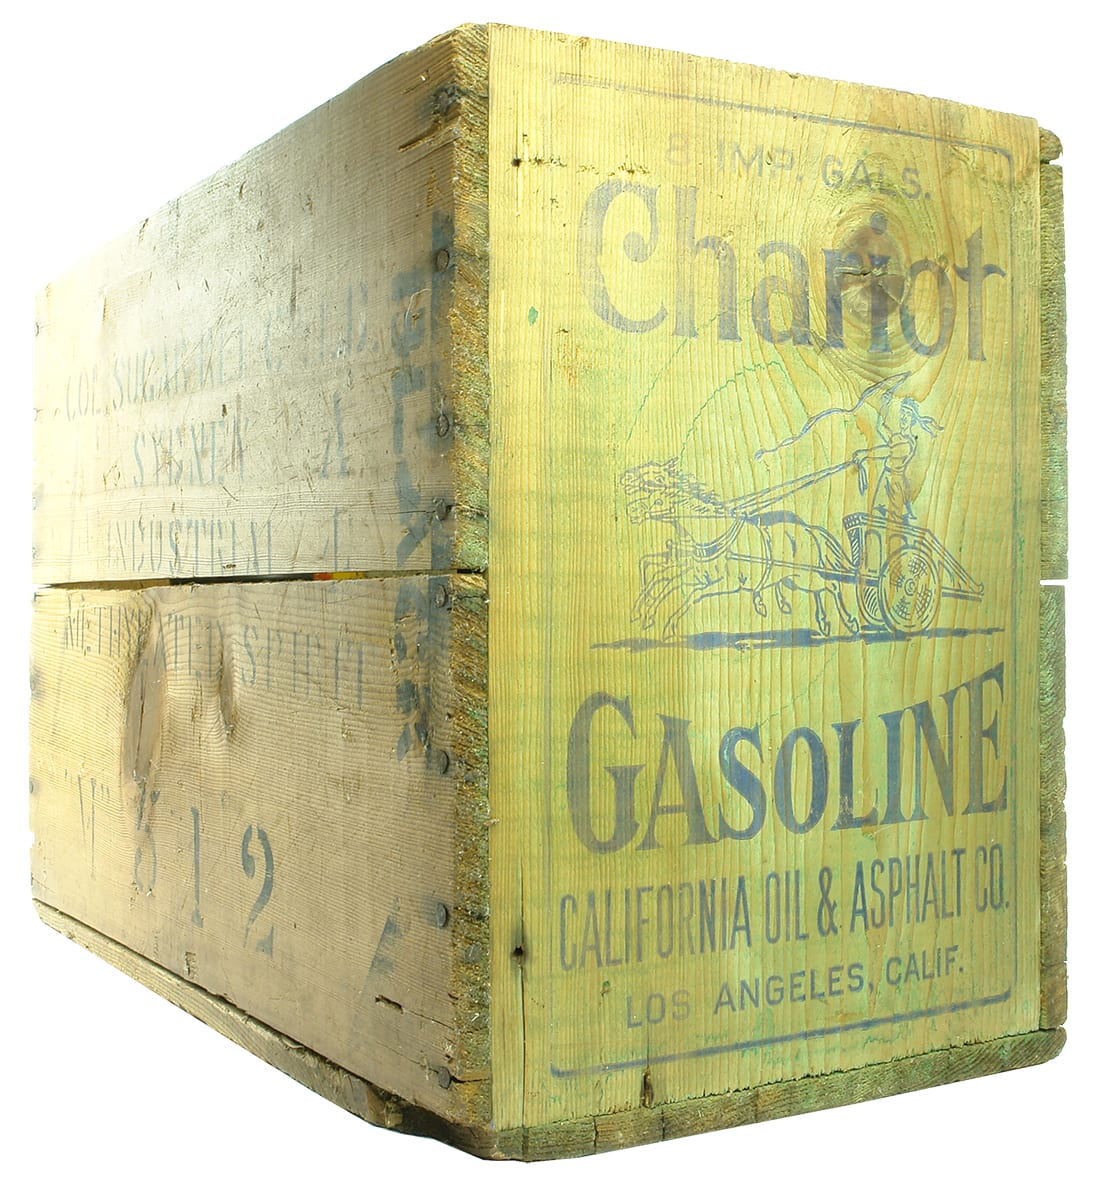 Chariot Gasoline California Oil and Asphalt Box